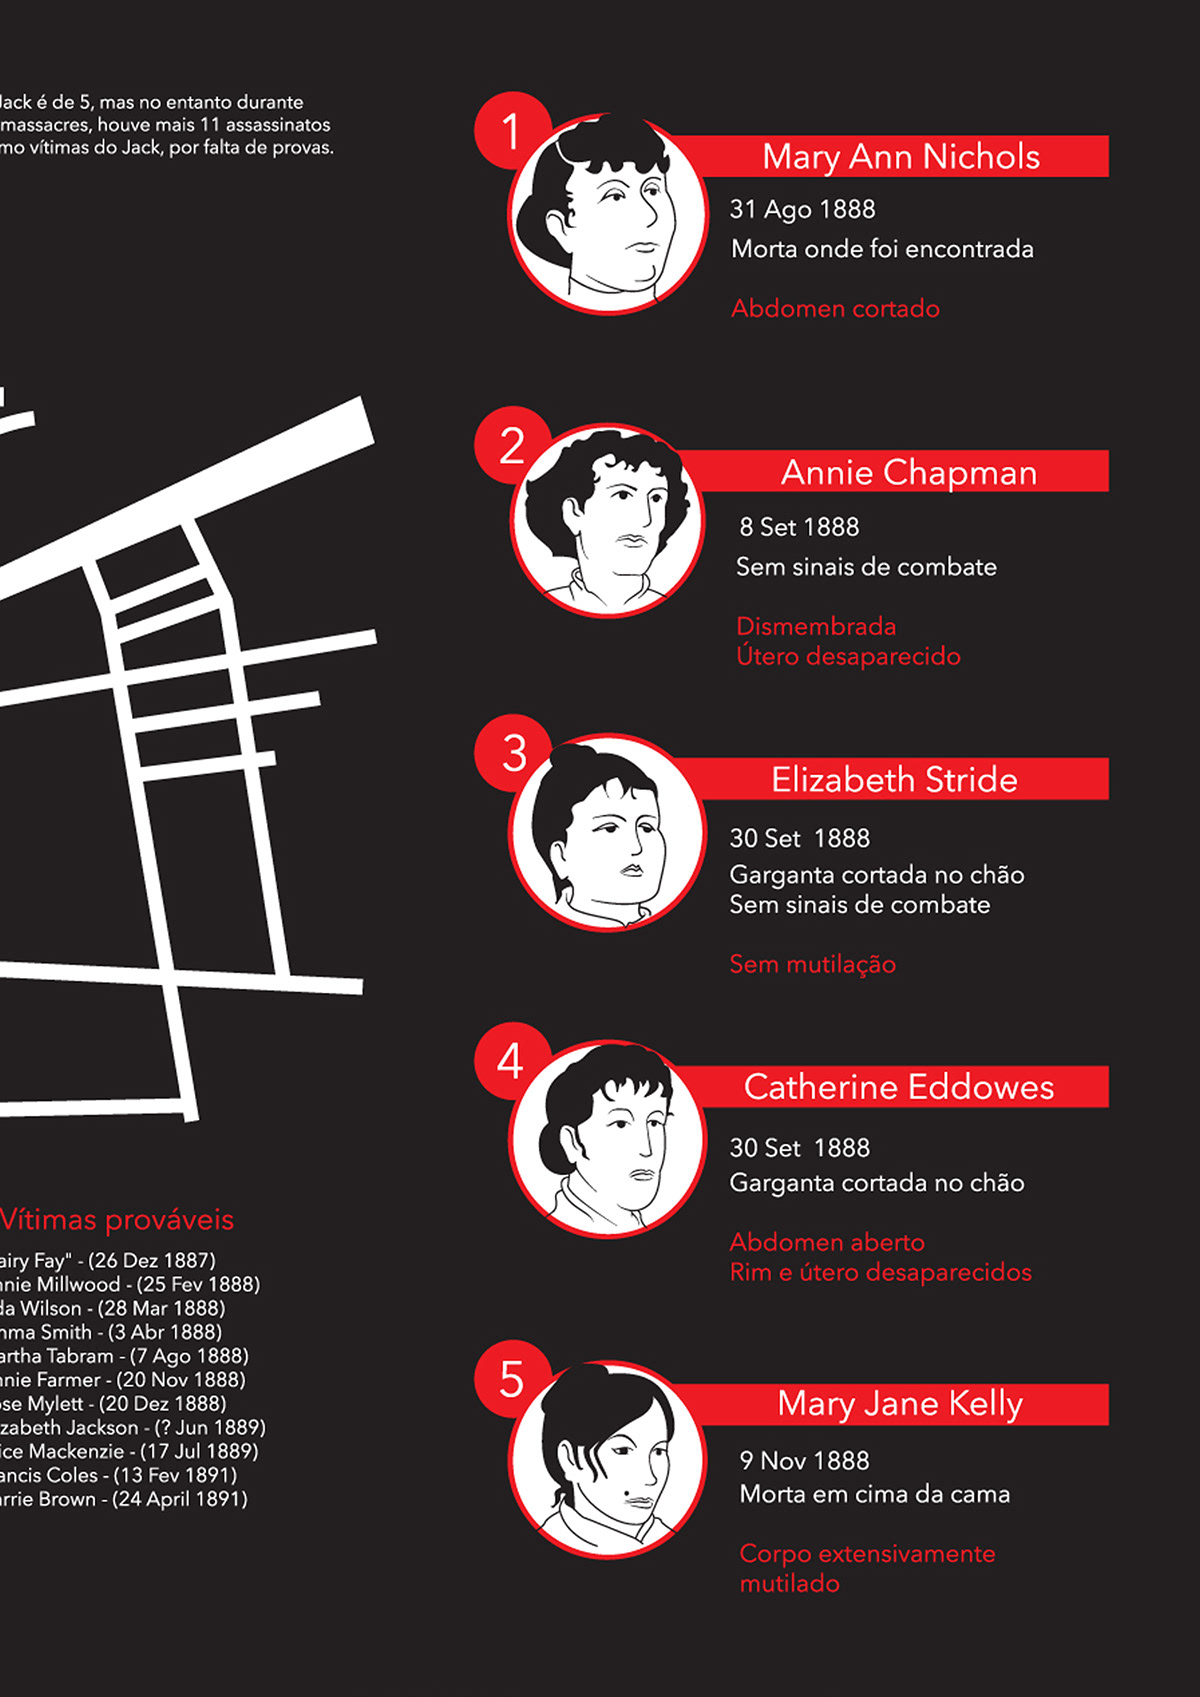 Jack the ripper infographic serial killer red murder